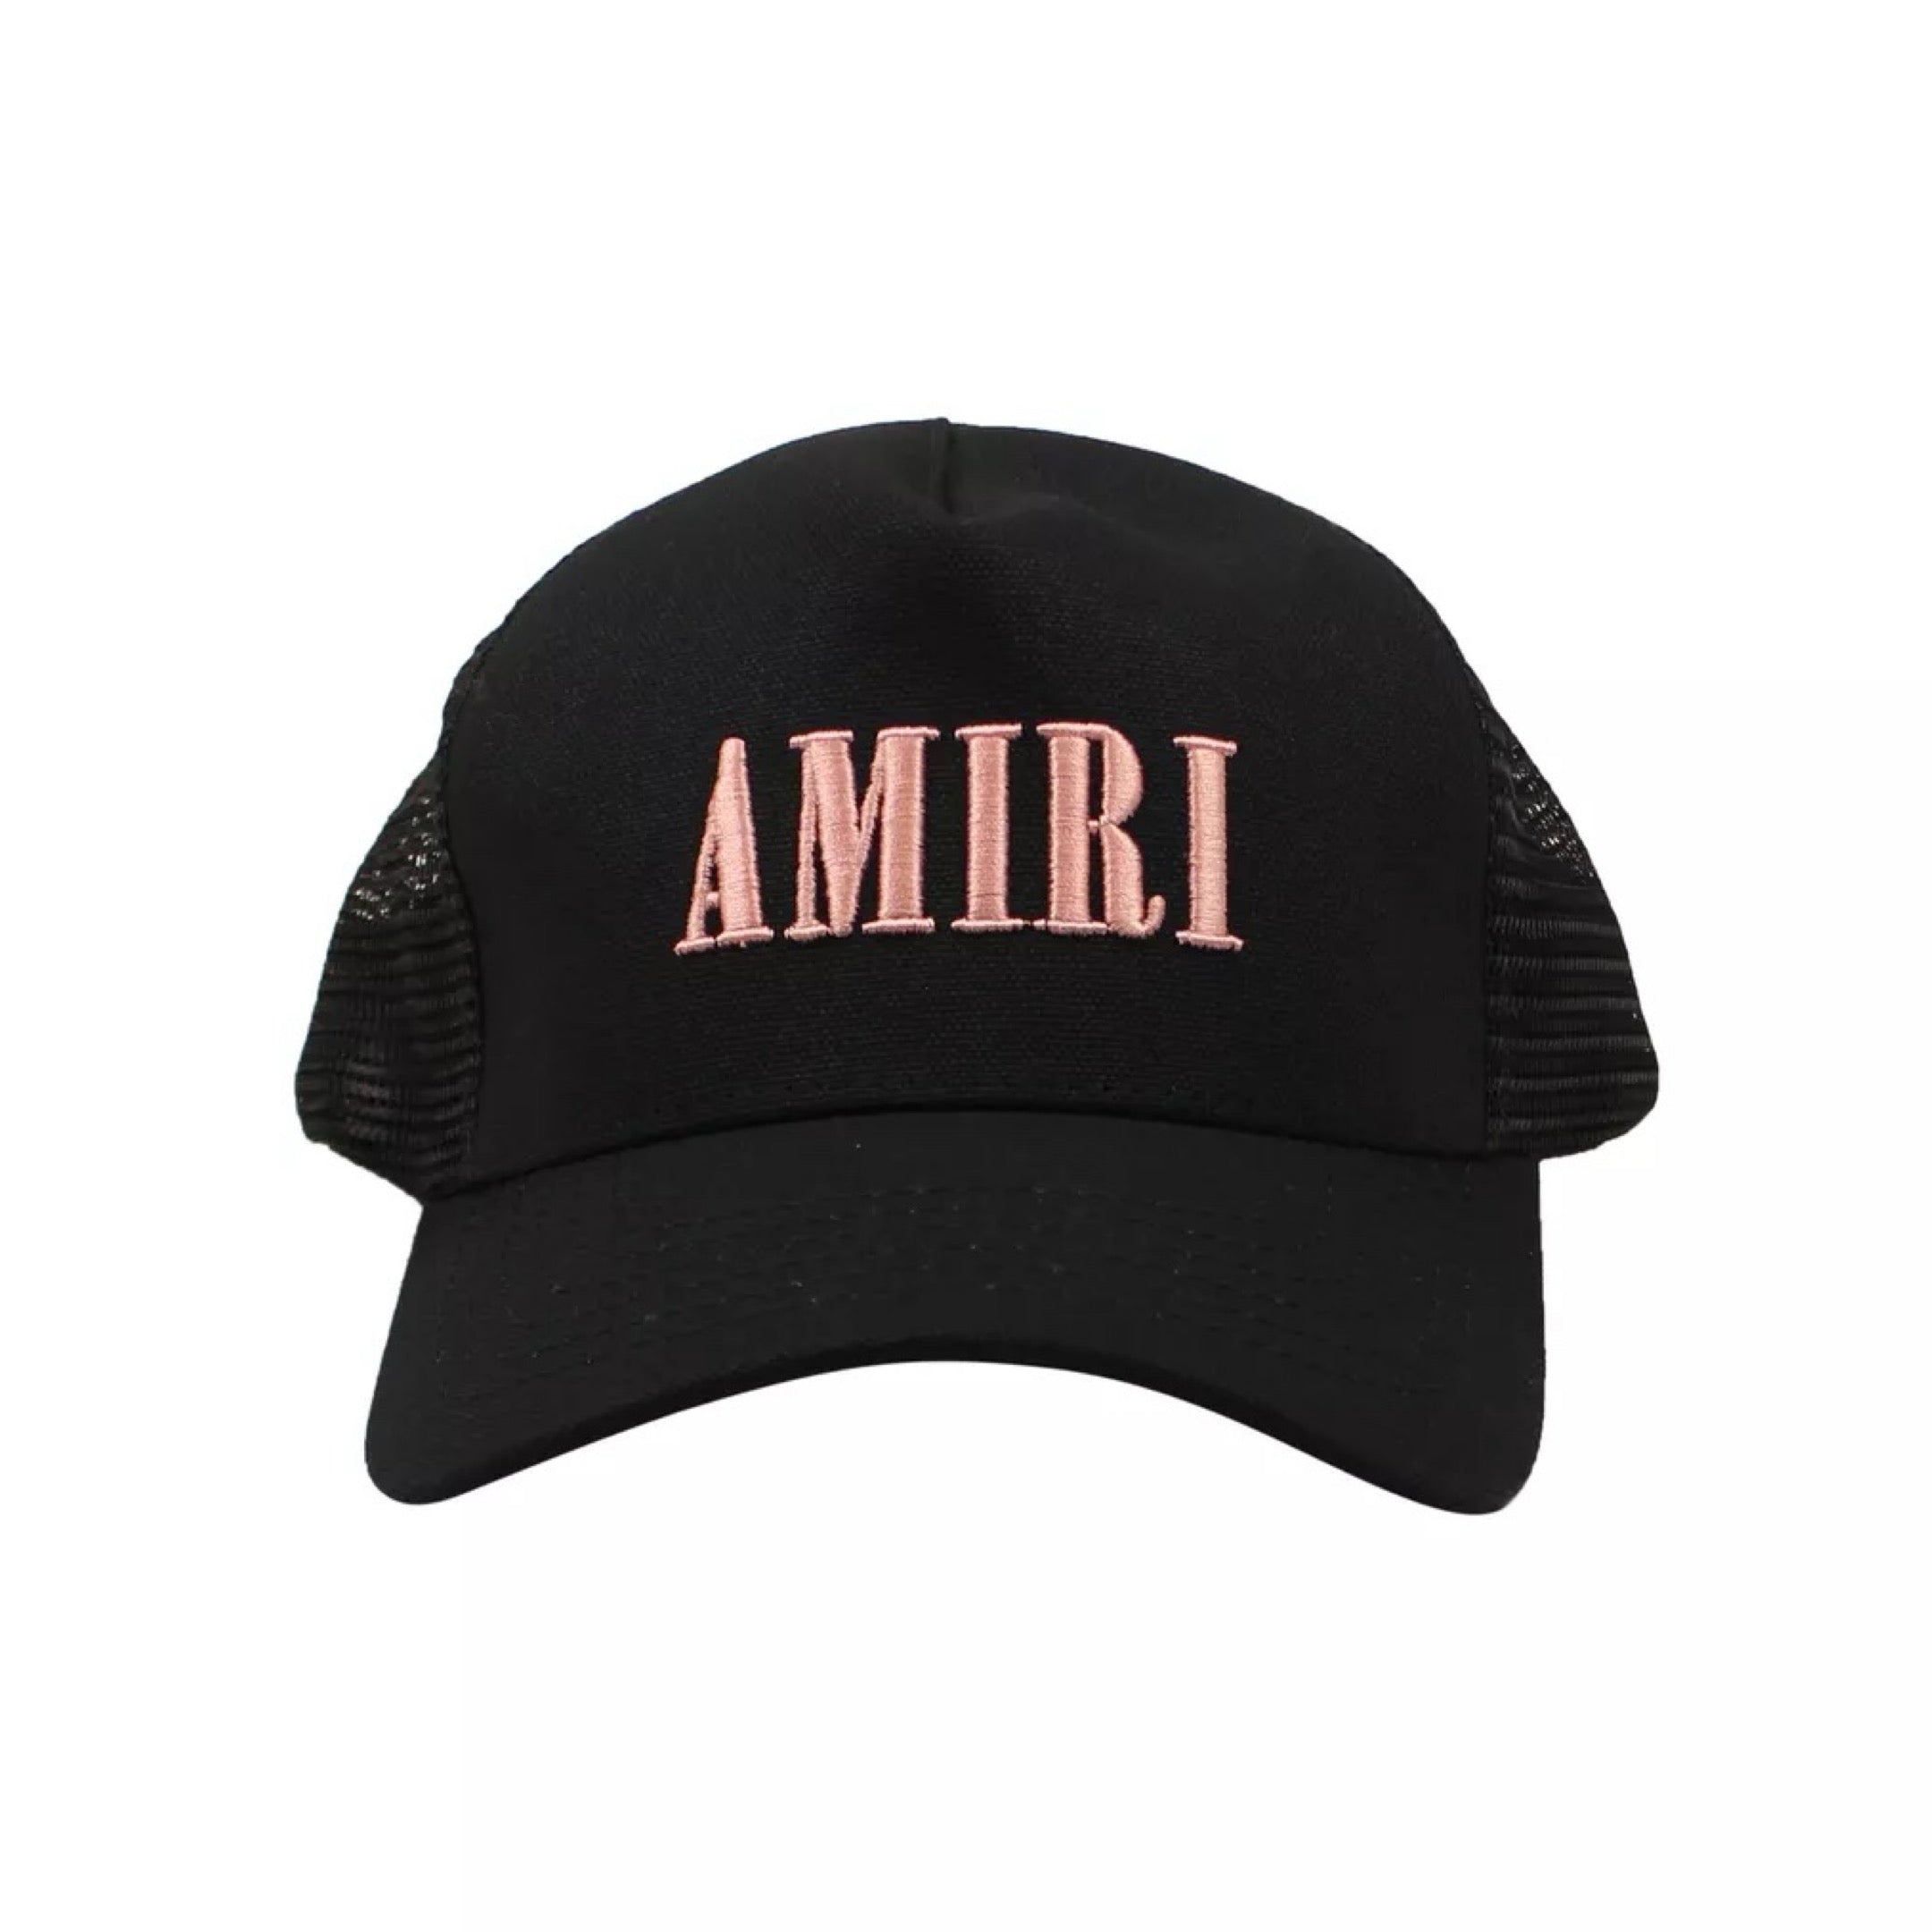 AMIRI TRUCKER HAT BLACK/PINK